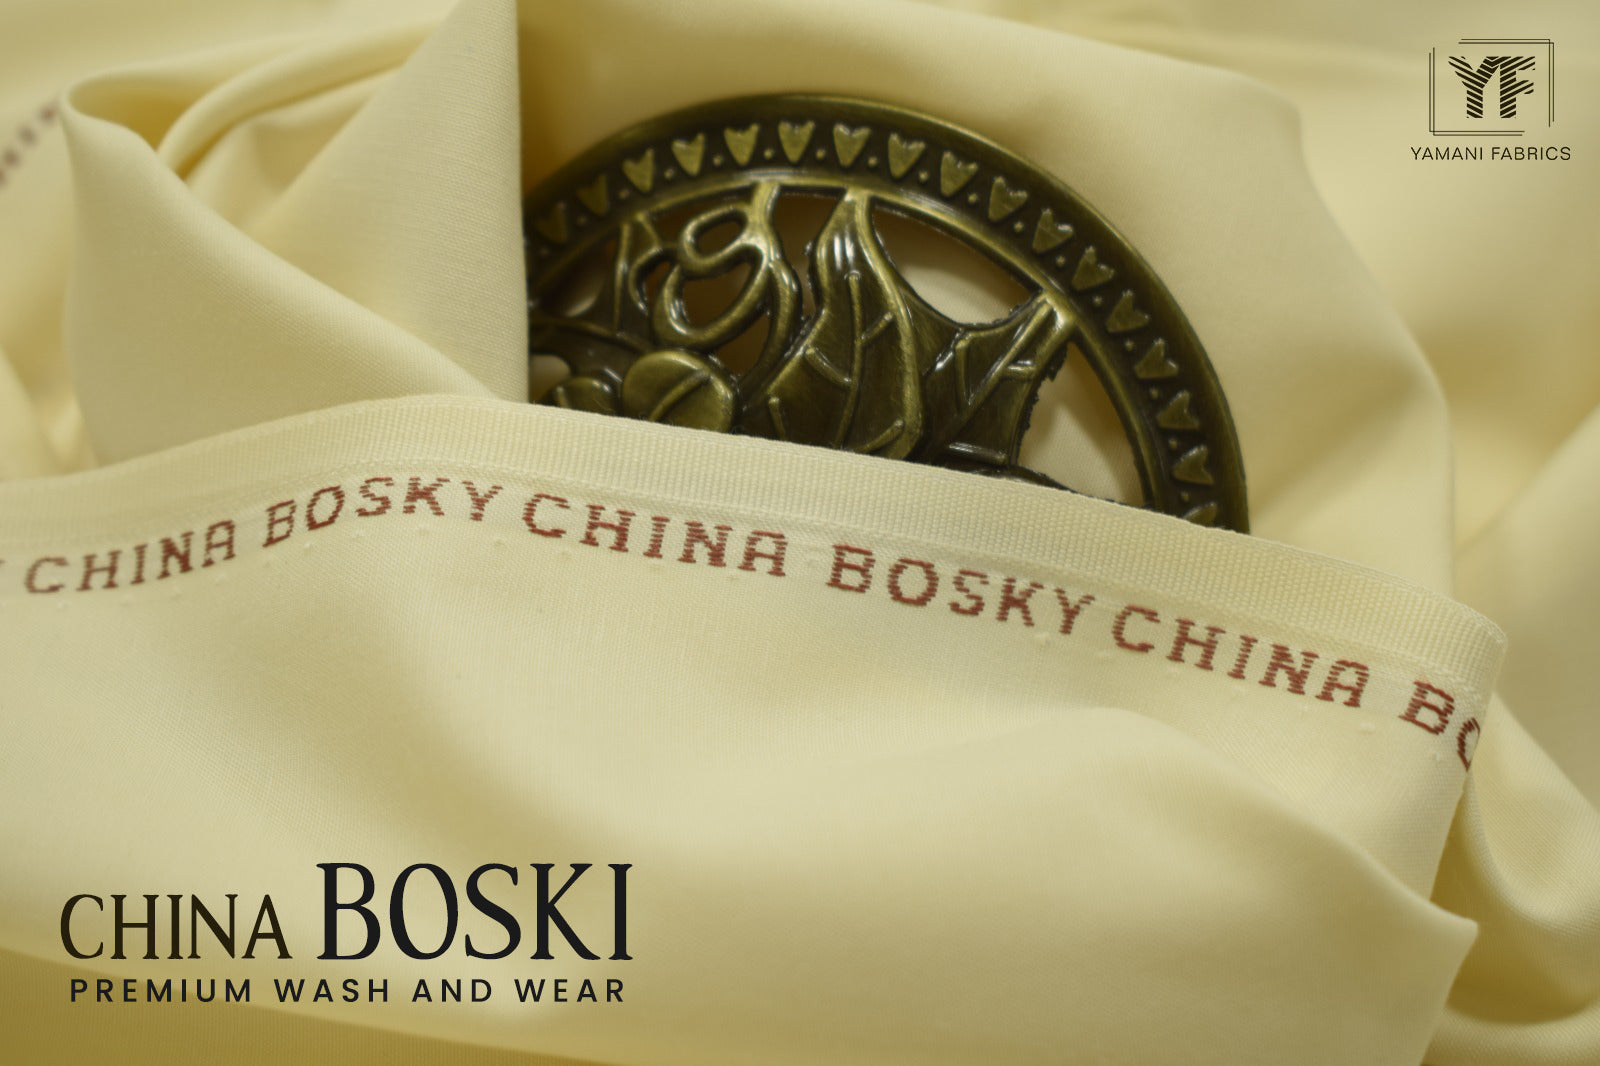 China boski(wash n wear) For men